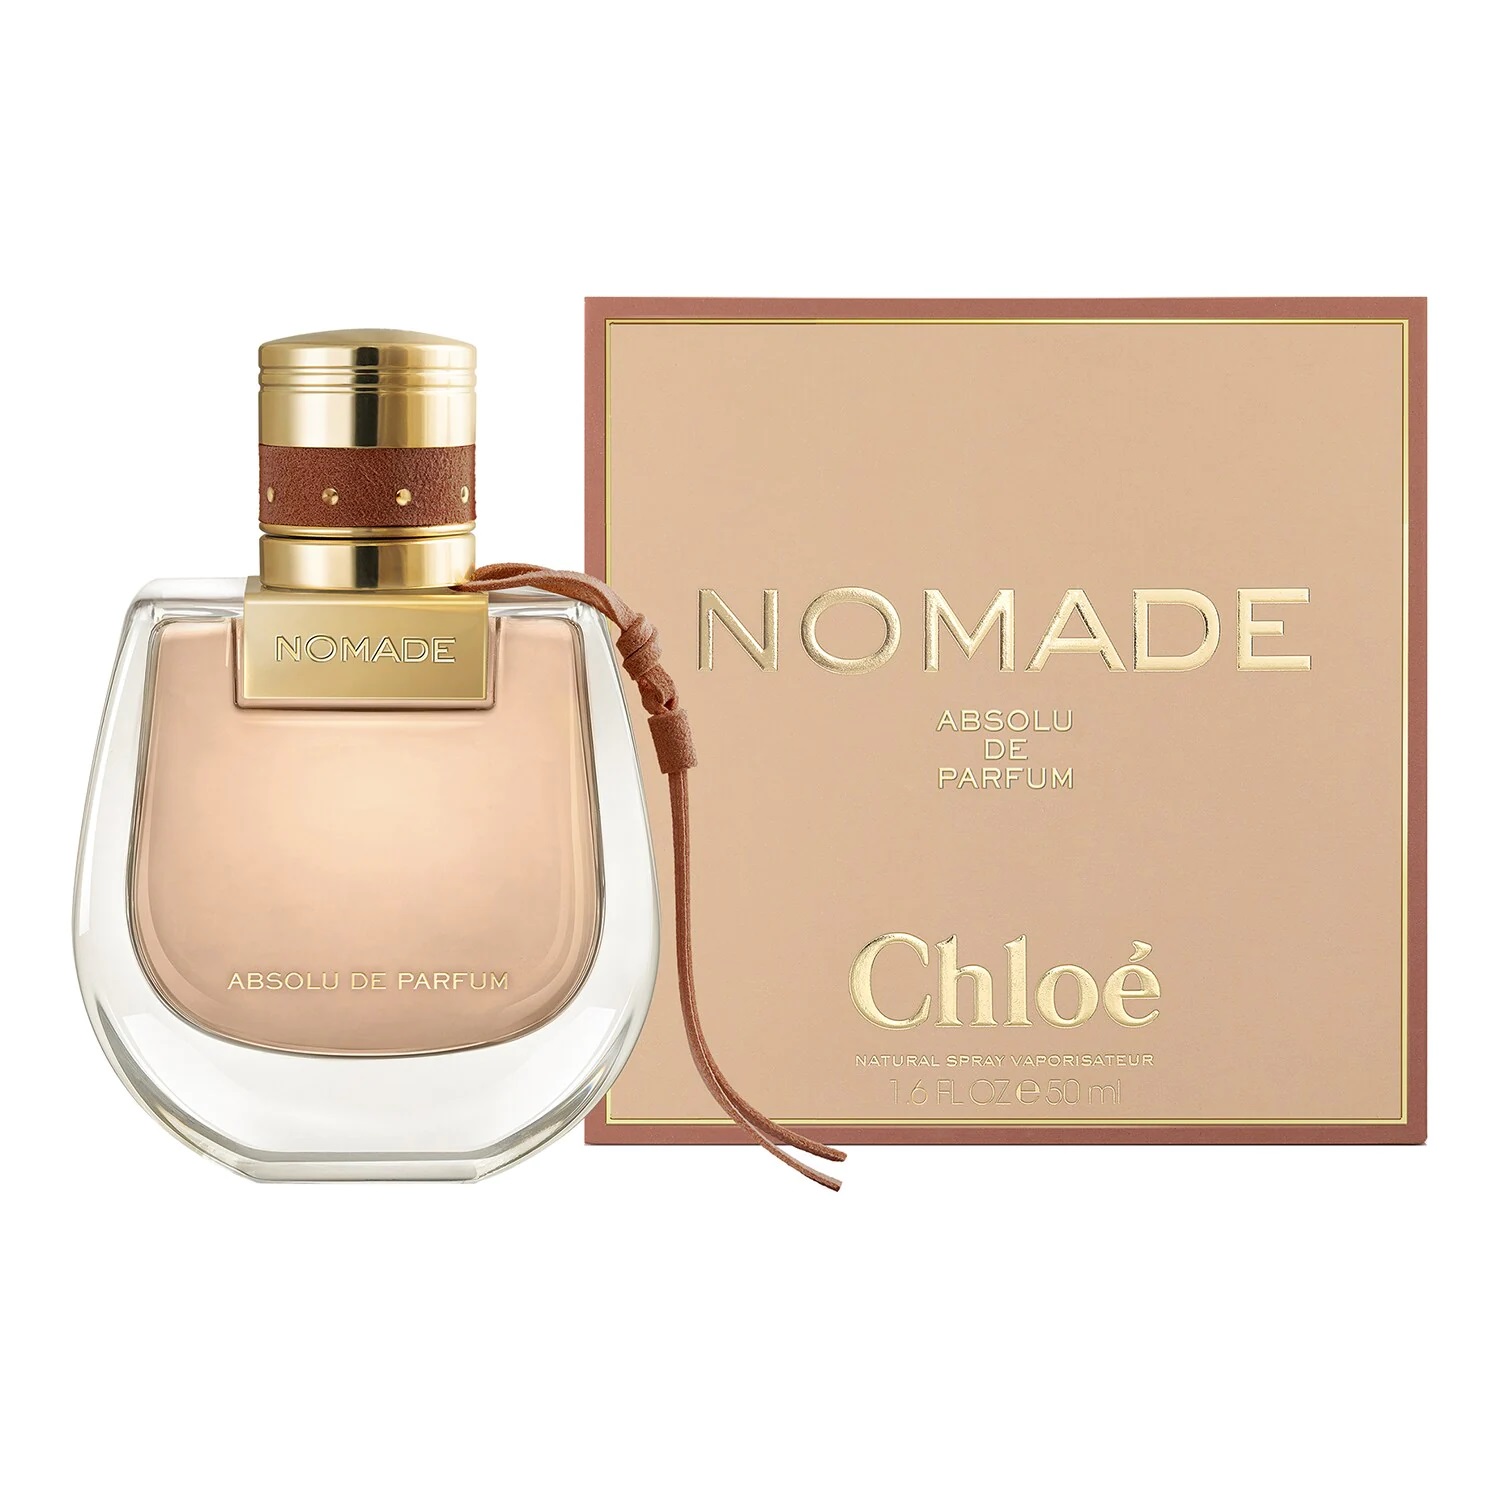 CHLOÉ Nomade Fragrance Absolu de Parfum for her - Scentists